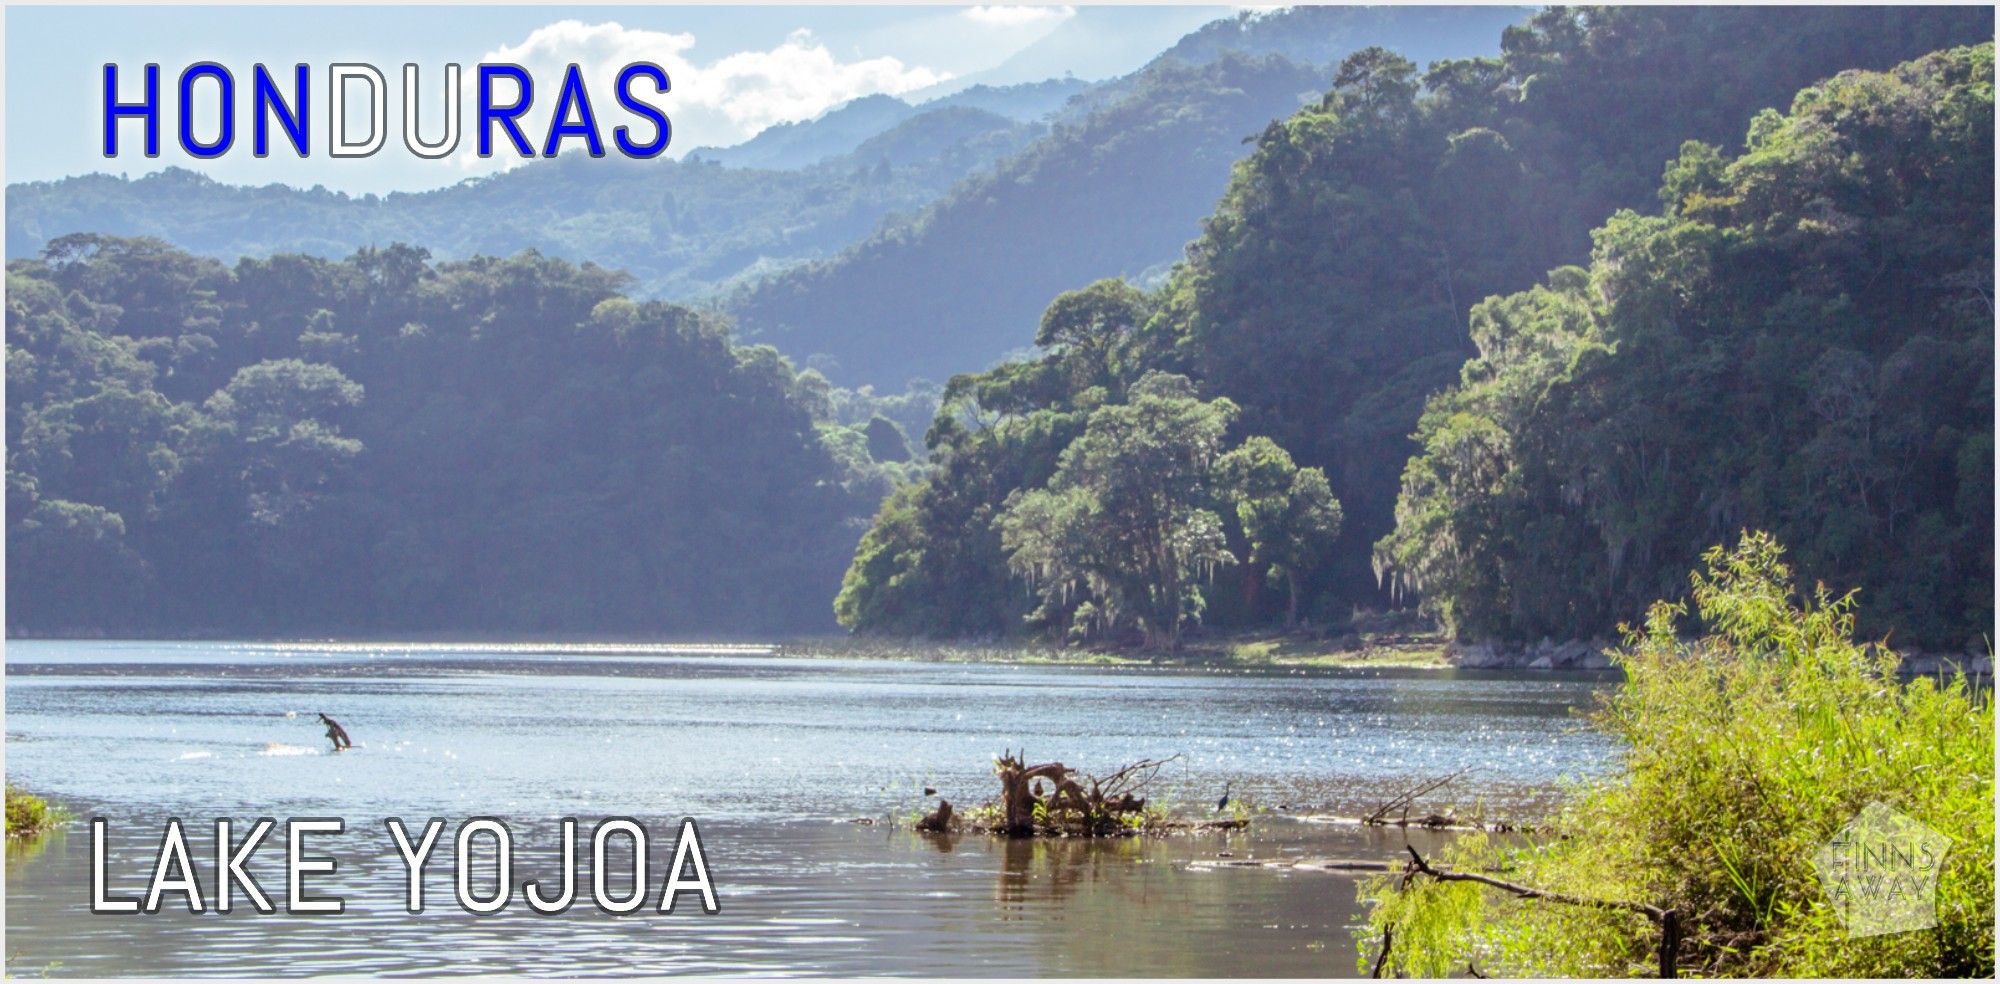 Lago de Yojoa Lake and Los Naranjos, Honduras | FinnsAway Travel Blog